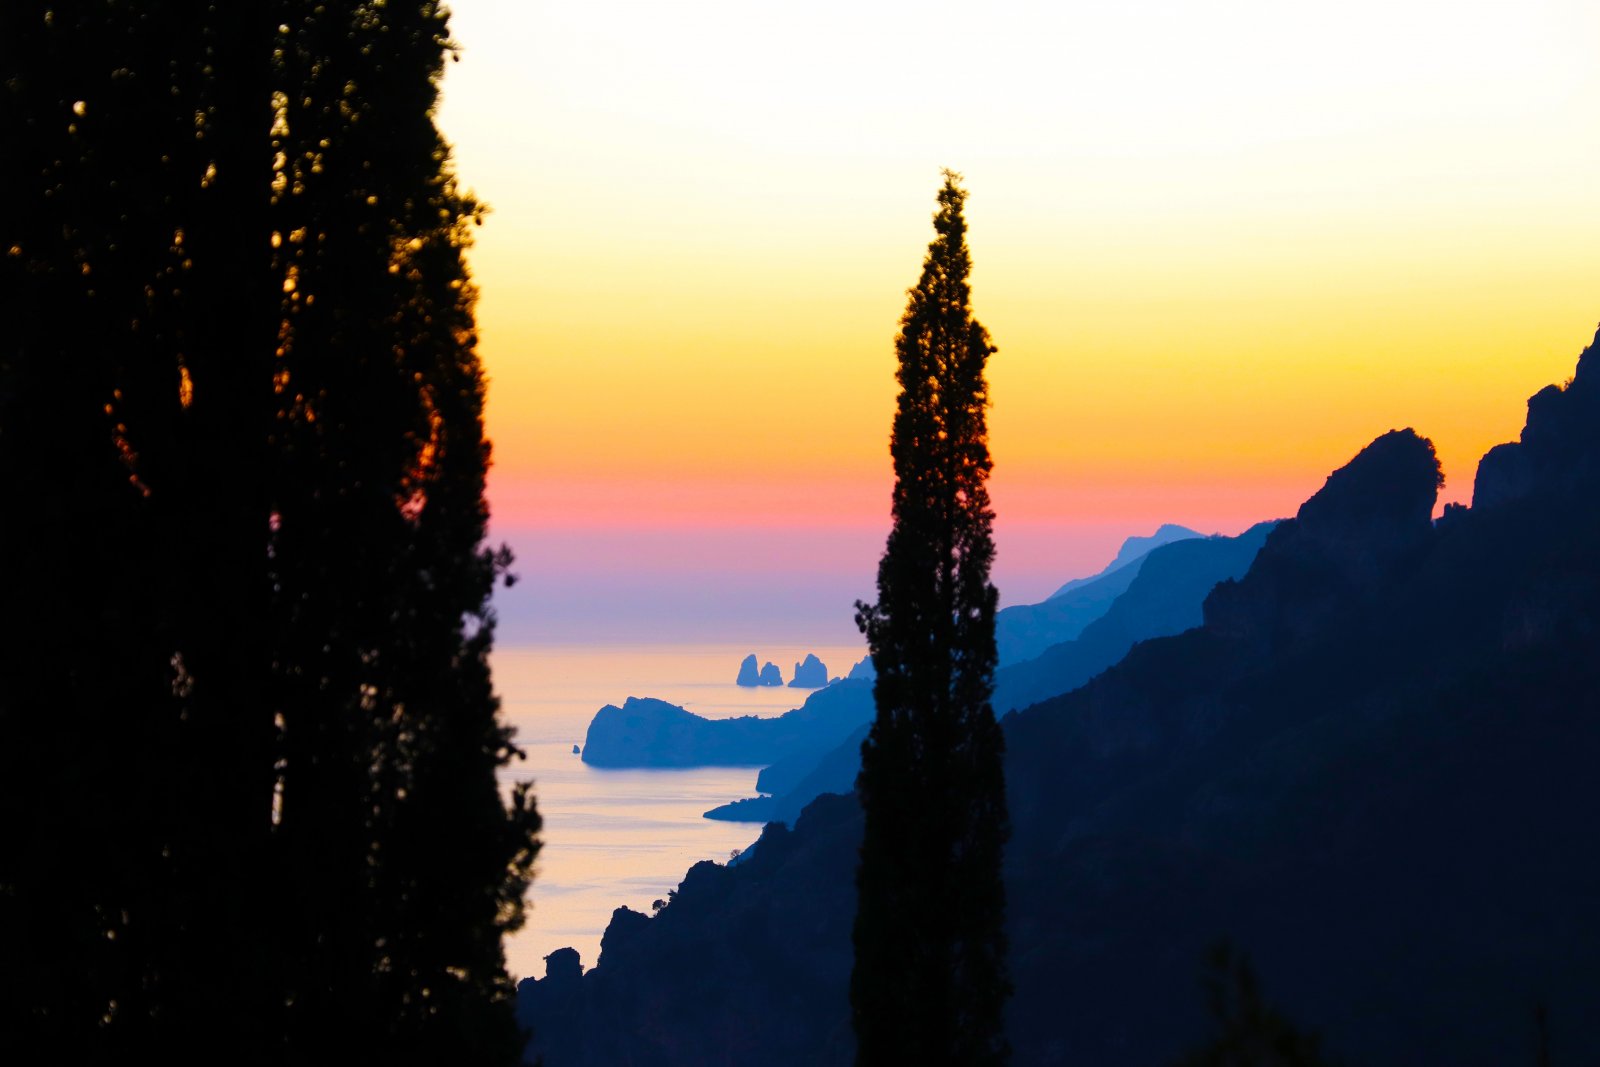 Capri in the sunset